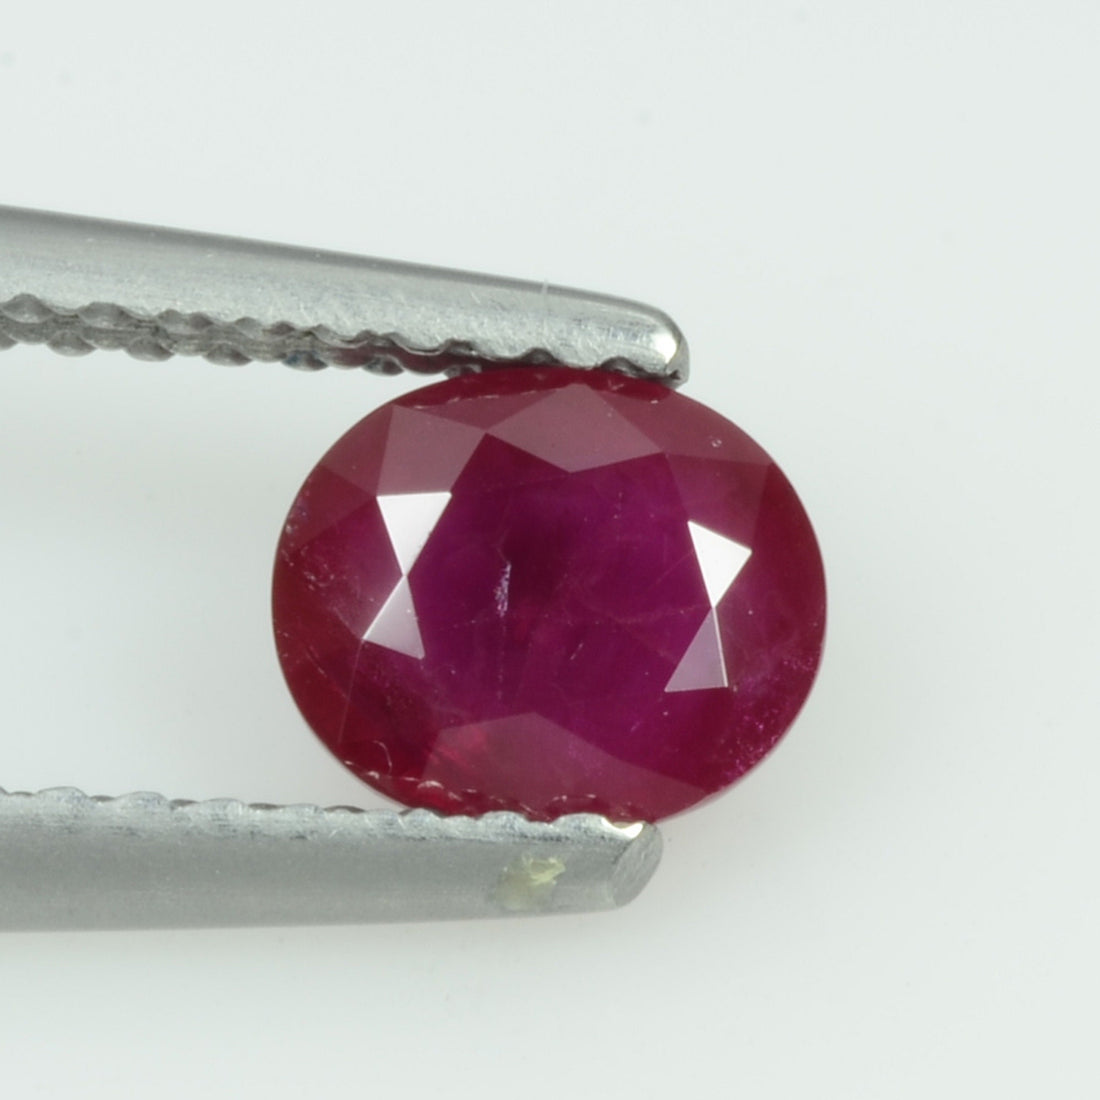 0.91 cts Natural Burma Ruby Loose Gemstone Oval Cut